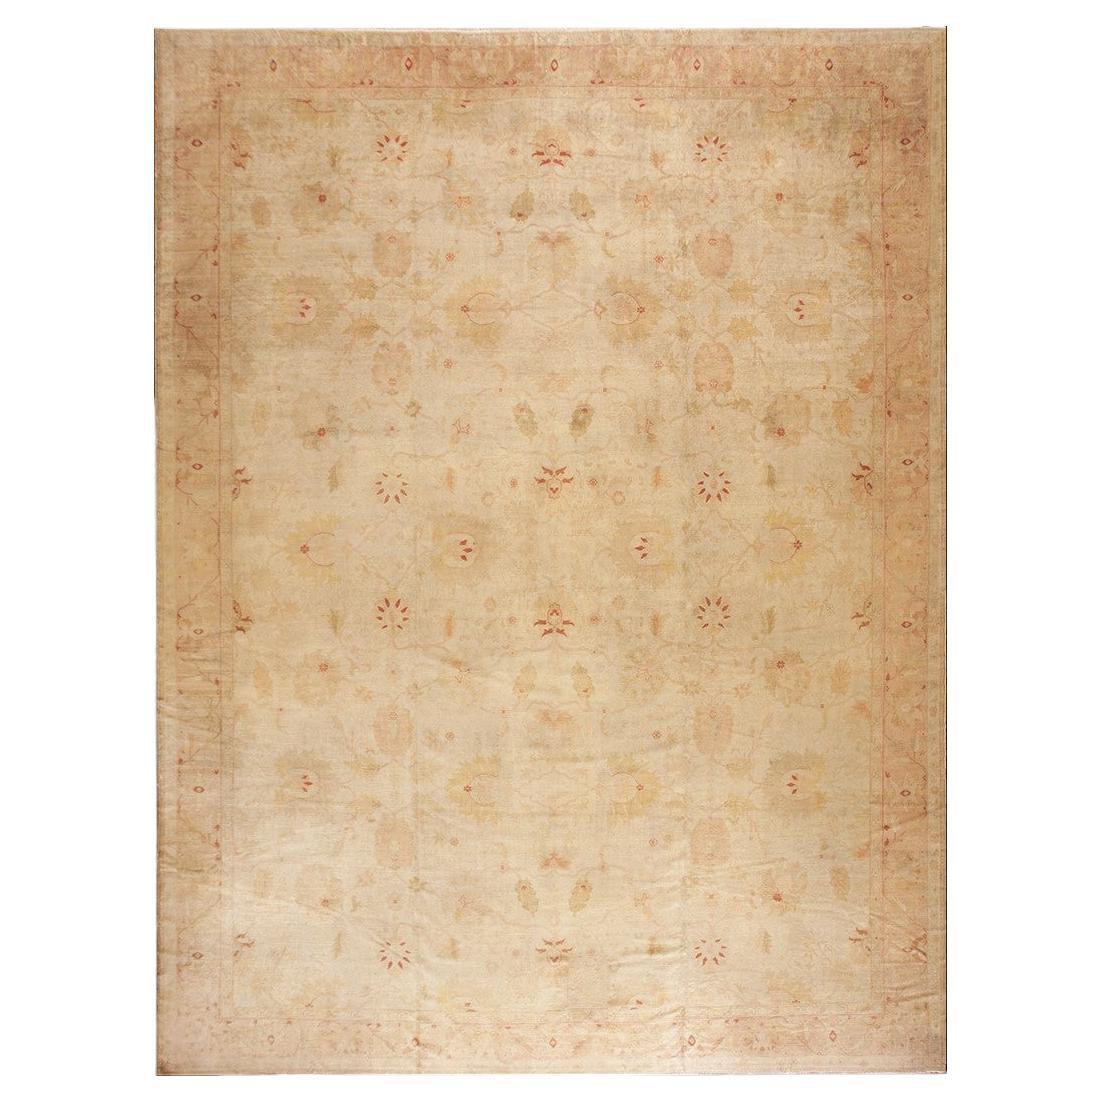 Early 20th Century Turkish Borlou Oushak Carpet ( 15'4" x 19'6" - 467 x 594 ) For Sale